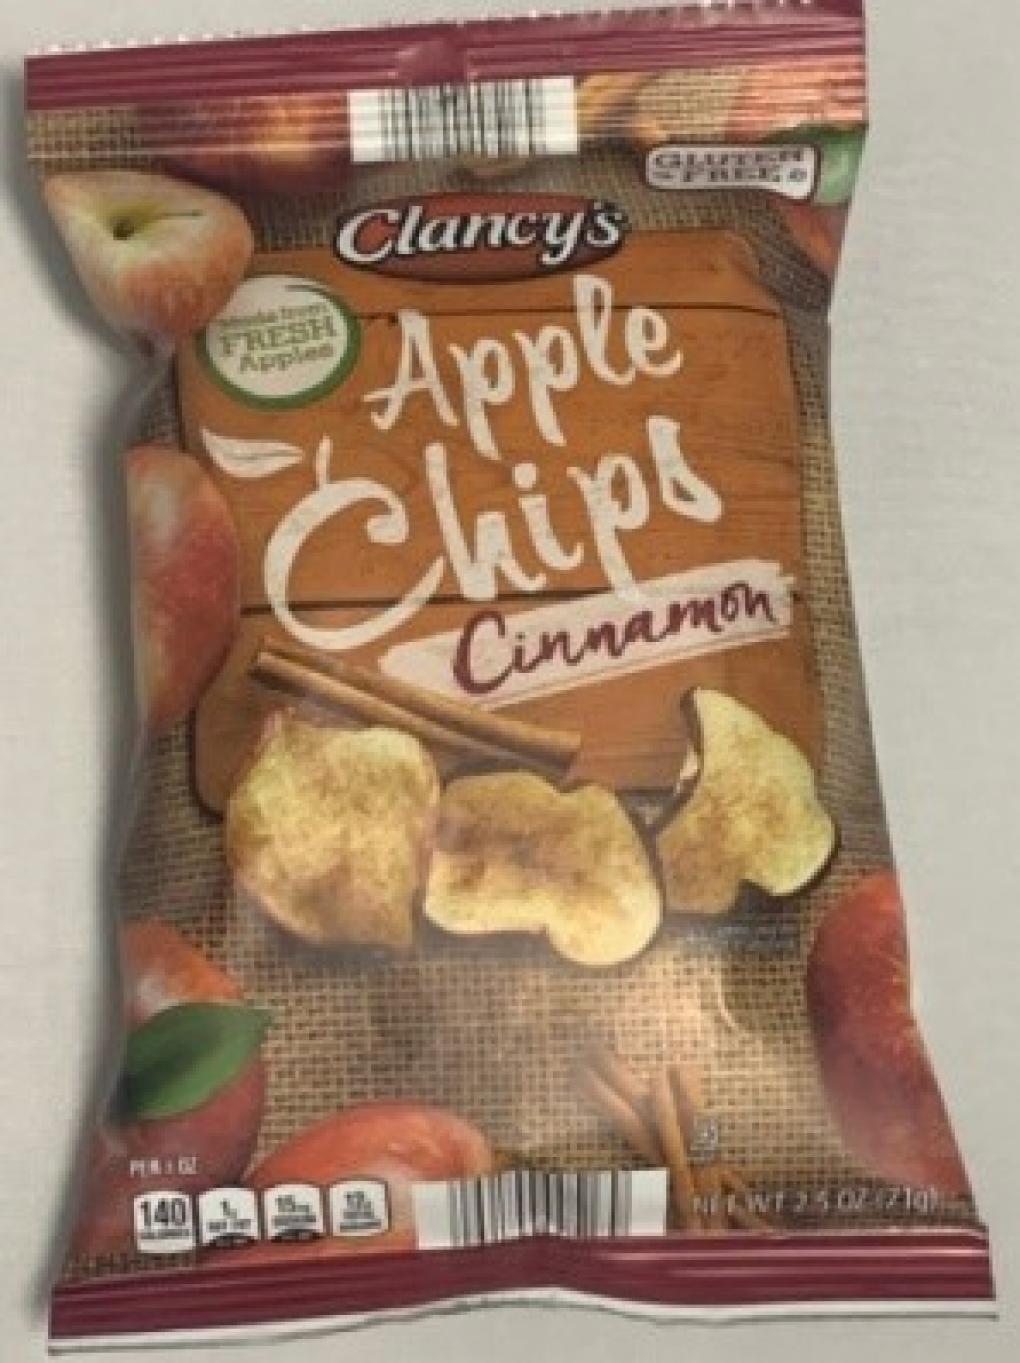 Seneca Recalled Cinnamon Apple Chips Because of Salmonella